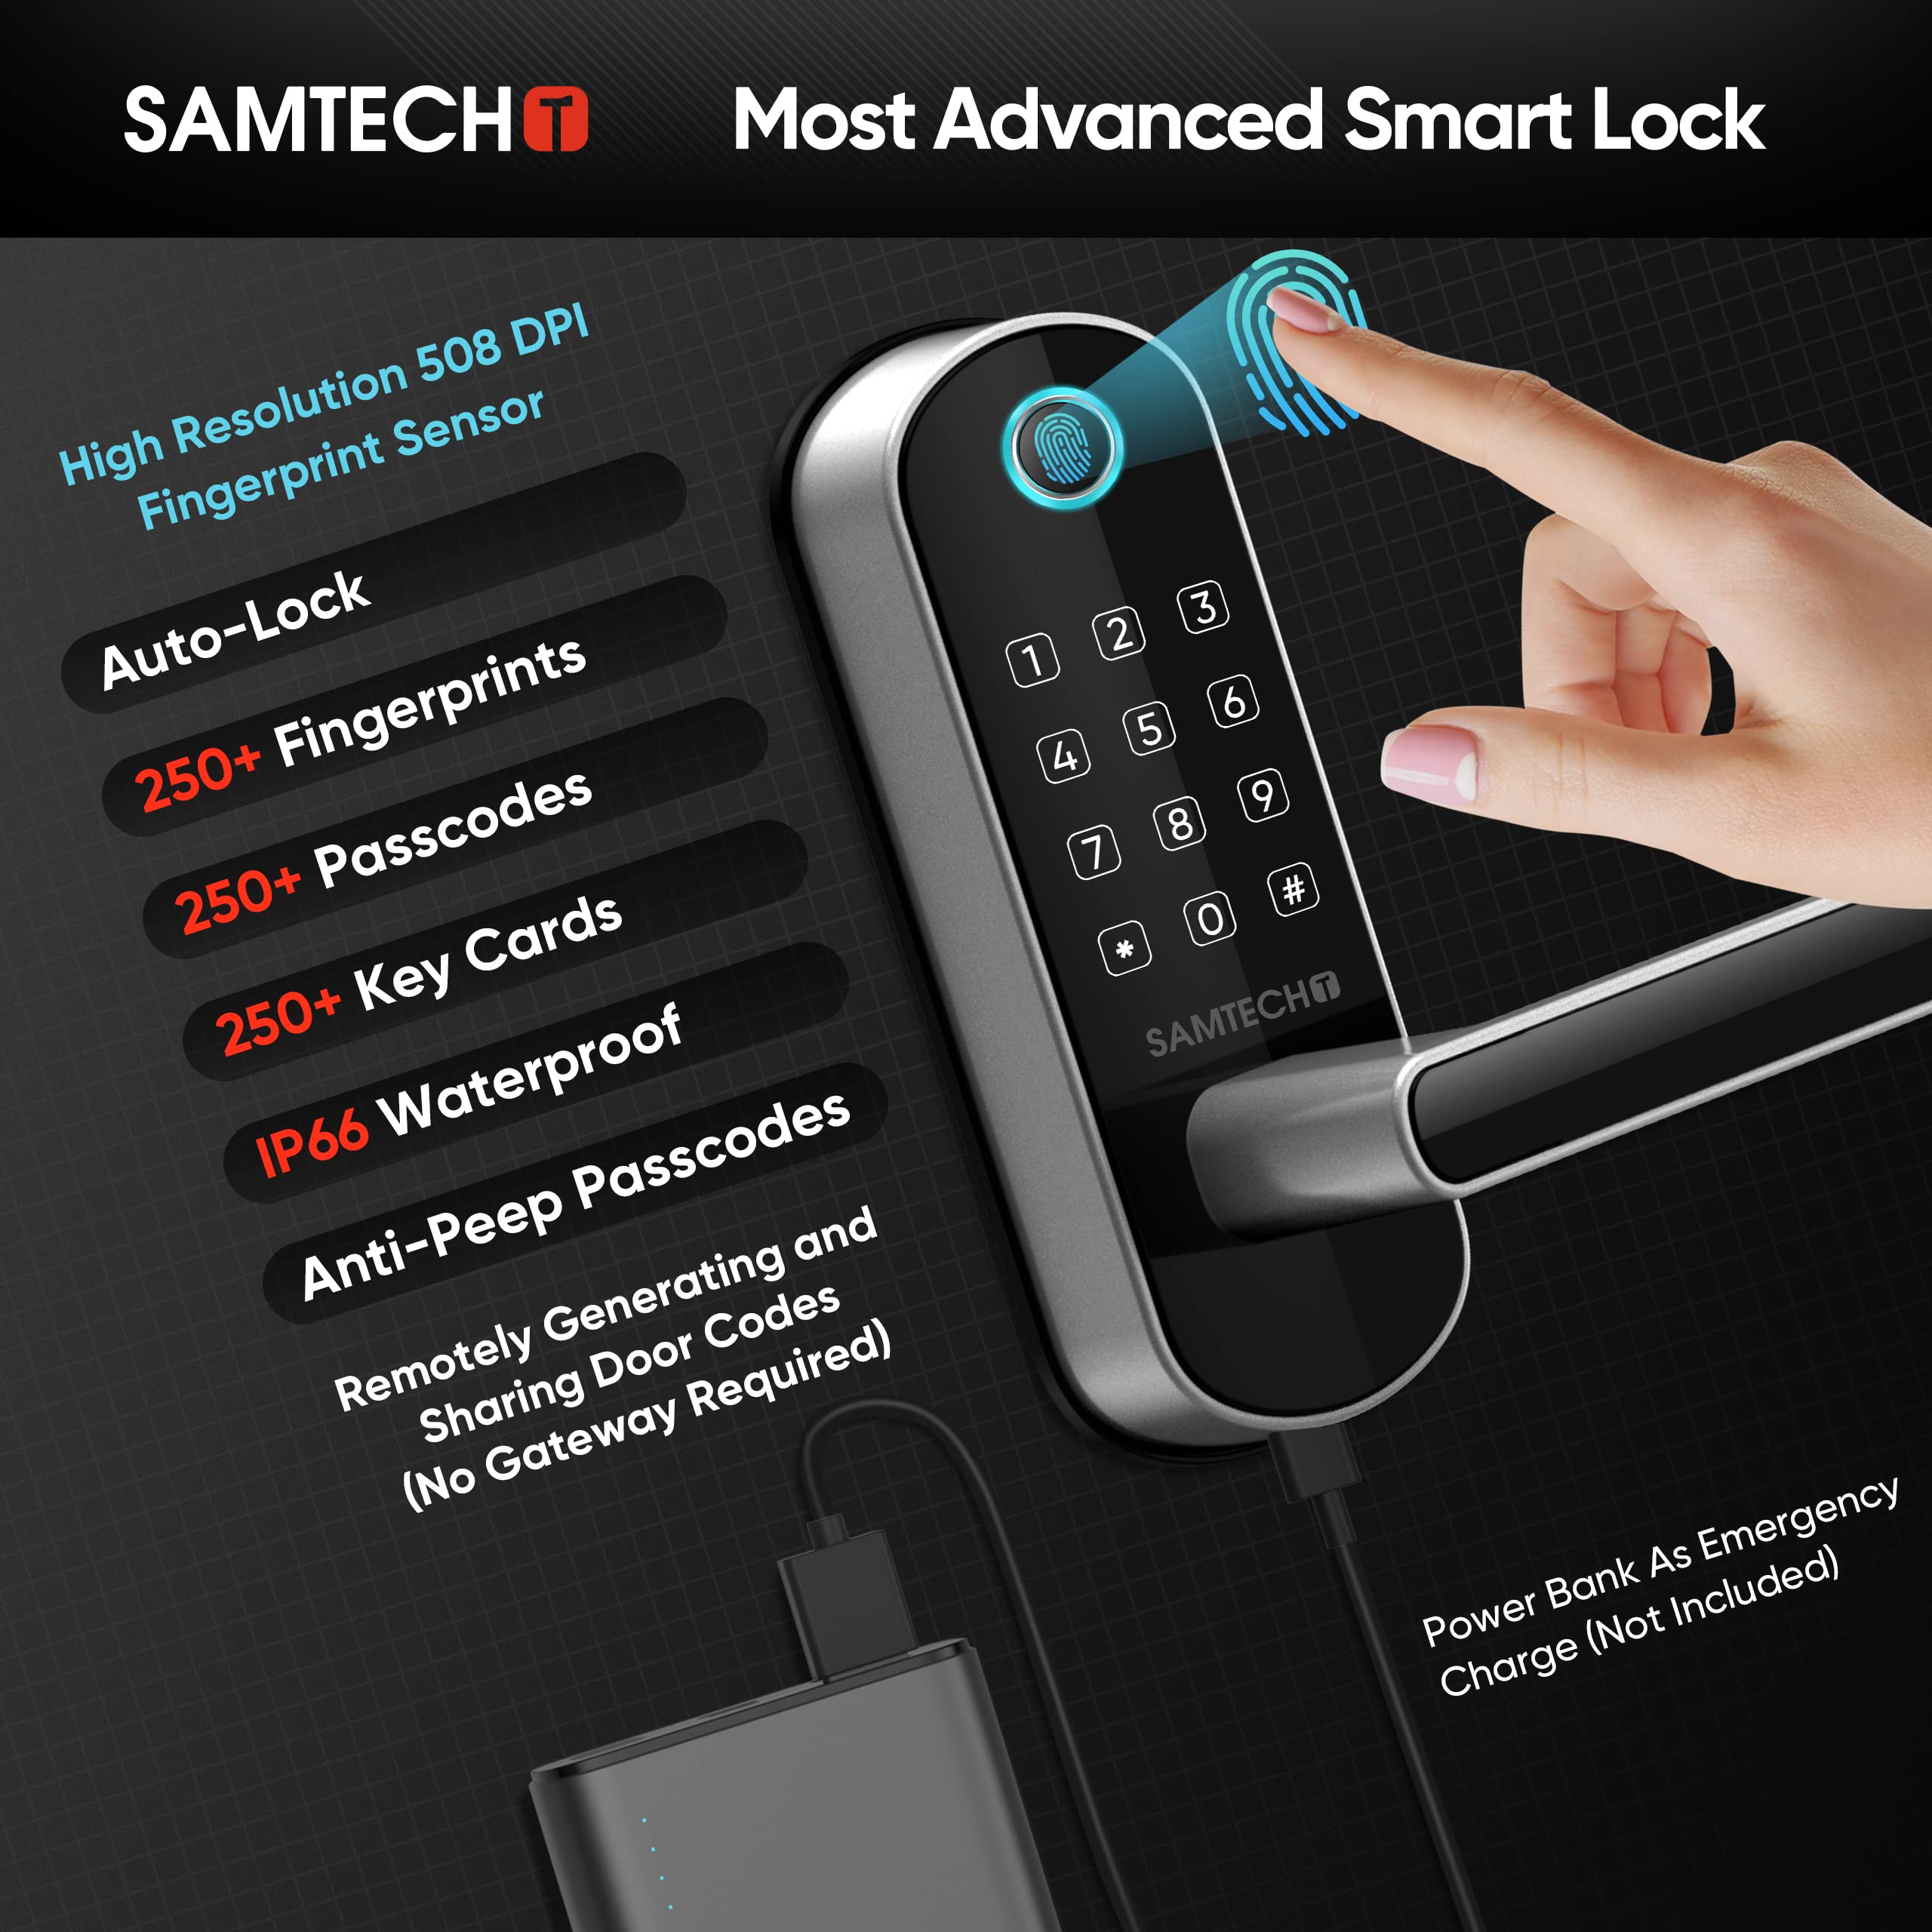 samtechT Smart Lock, Keyless Entry Door Lock, Fingerprint Door Lock, Smart Door Lock with Handle, Digital Door Lock, Smart Lock for Front Door, Bluetooth Electronic Door Lock (Powered by Sifely)